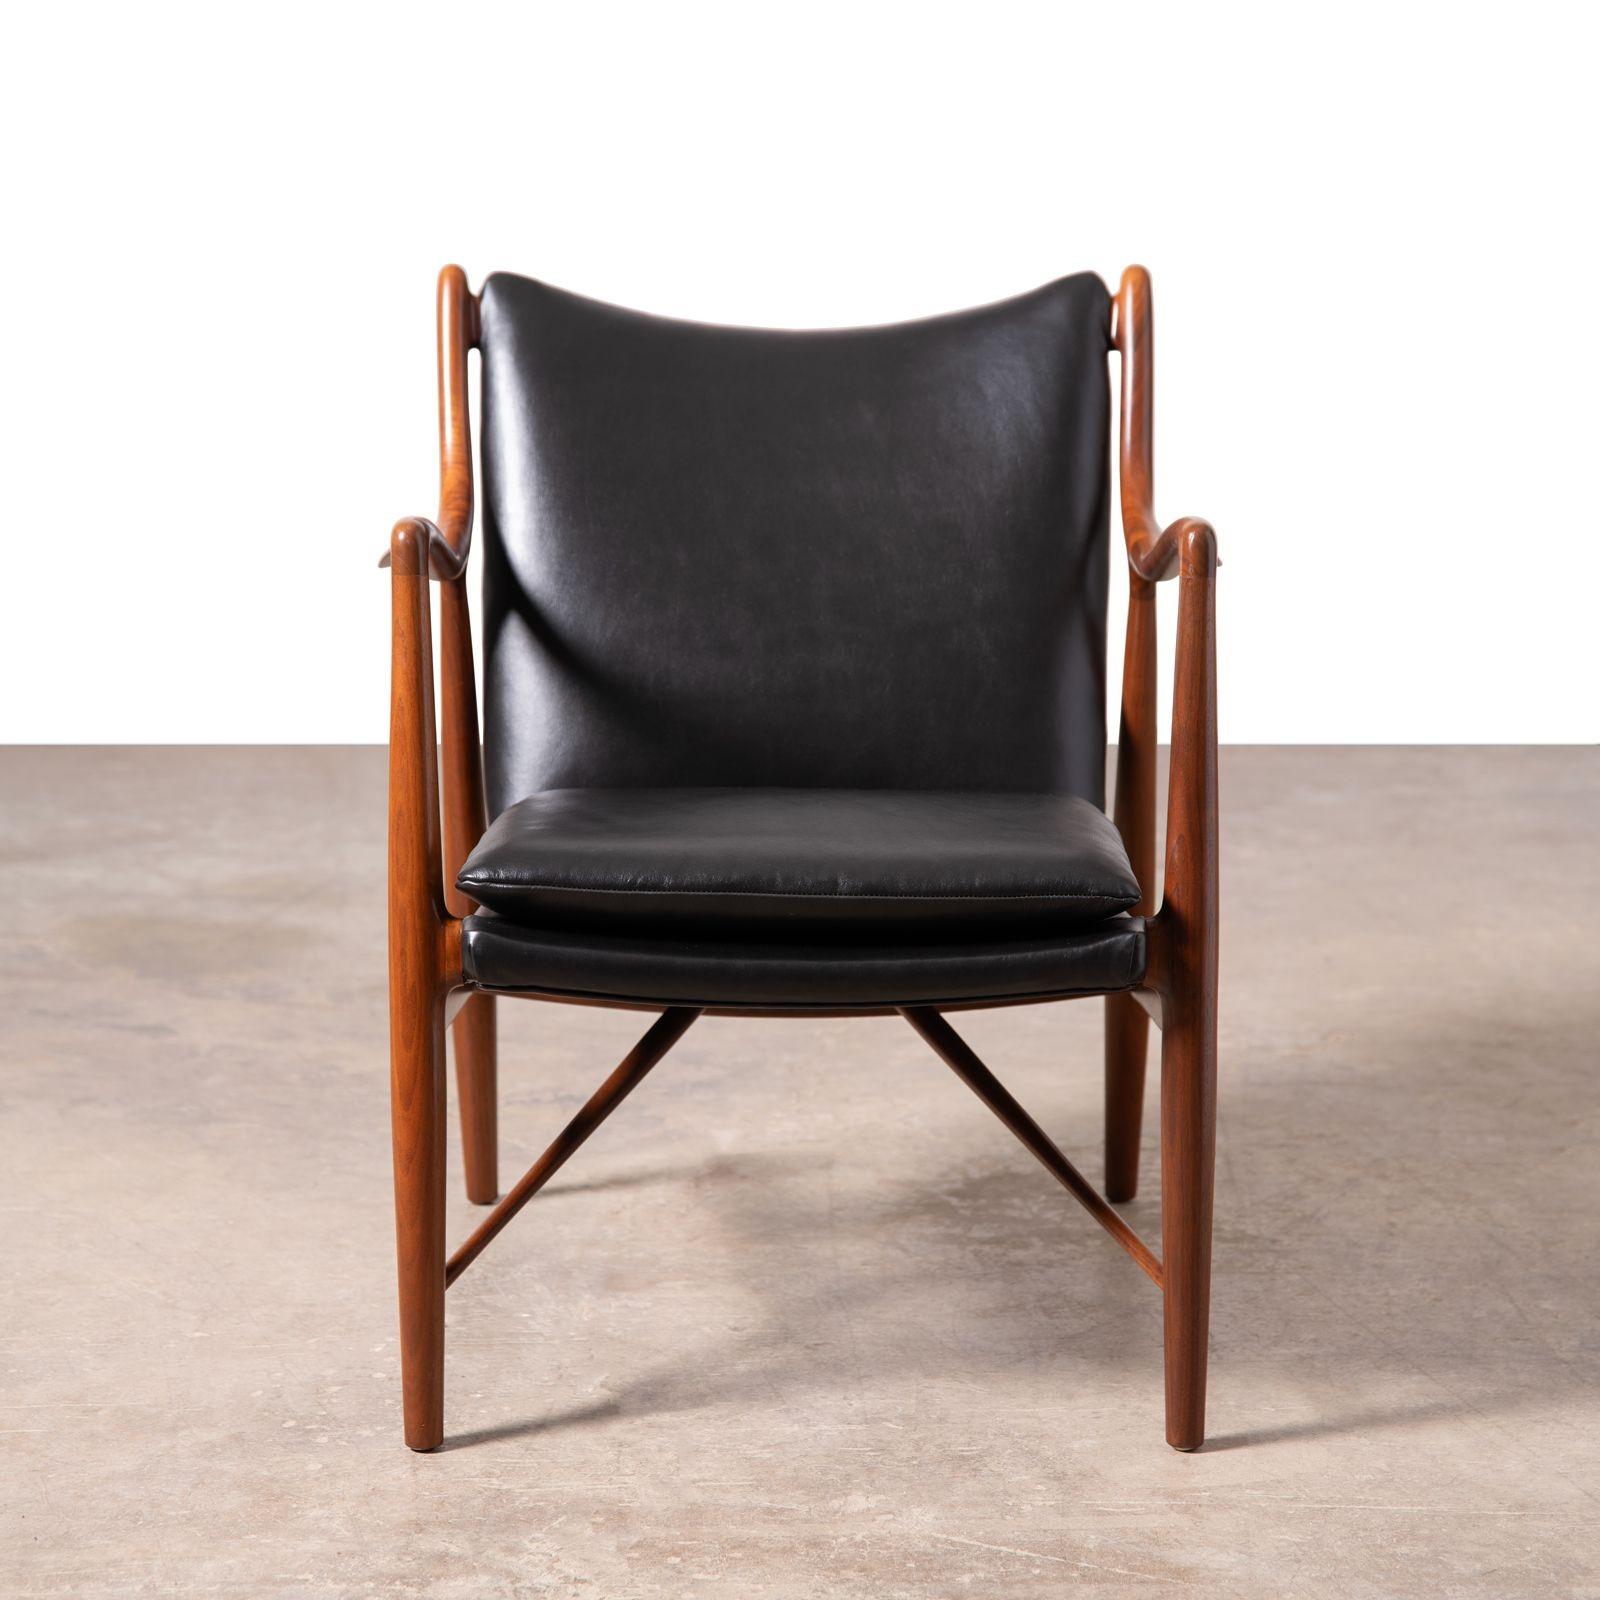 Finn Juhl NV-45 Scandinavian Lounge Chairs in Walnut and Black Leather 1950s For Sale 4